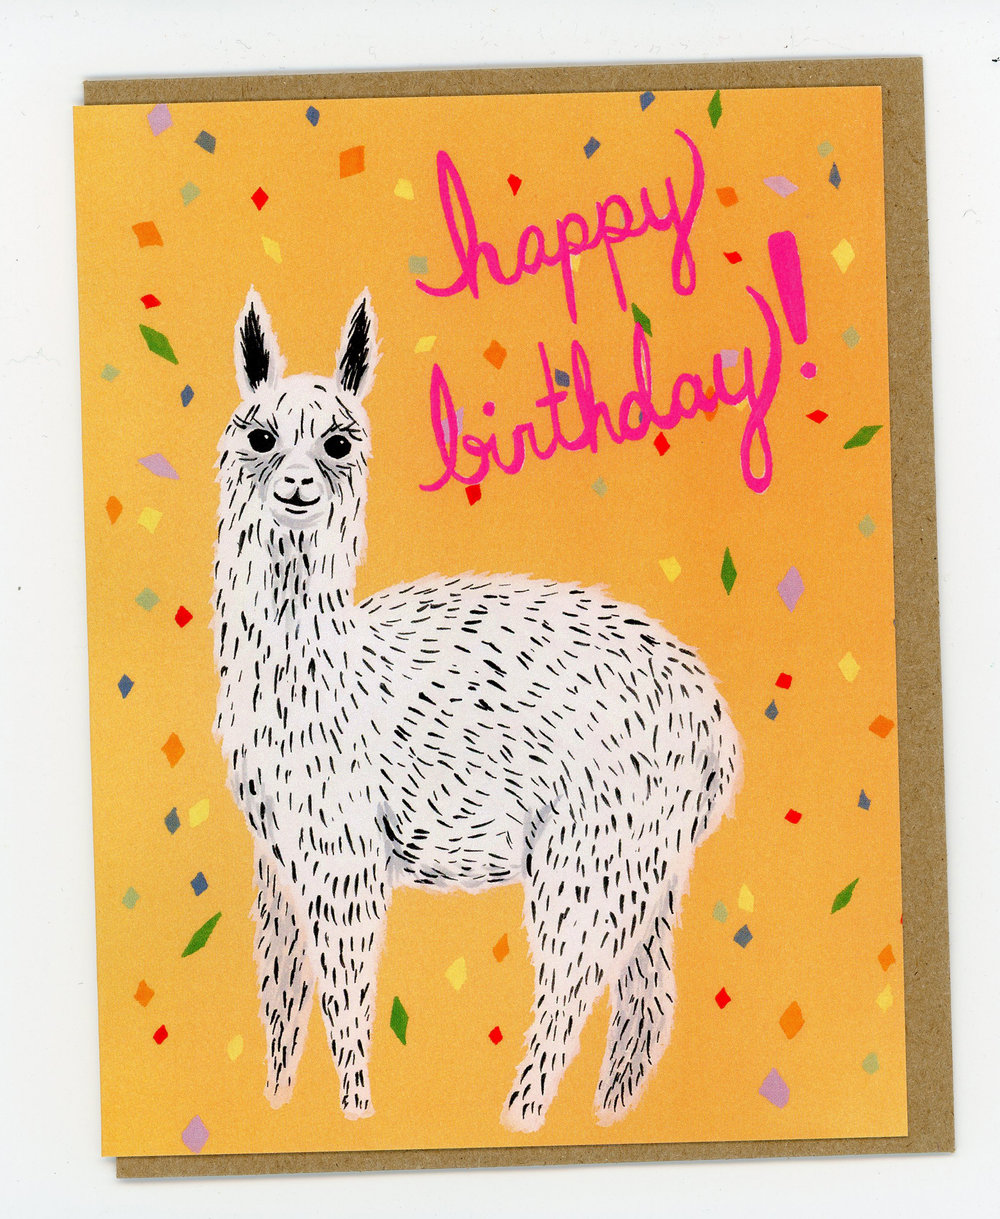 Pildiotsingu alpaca birthday card tulemus